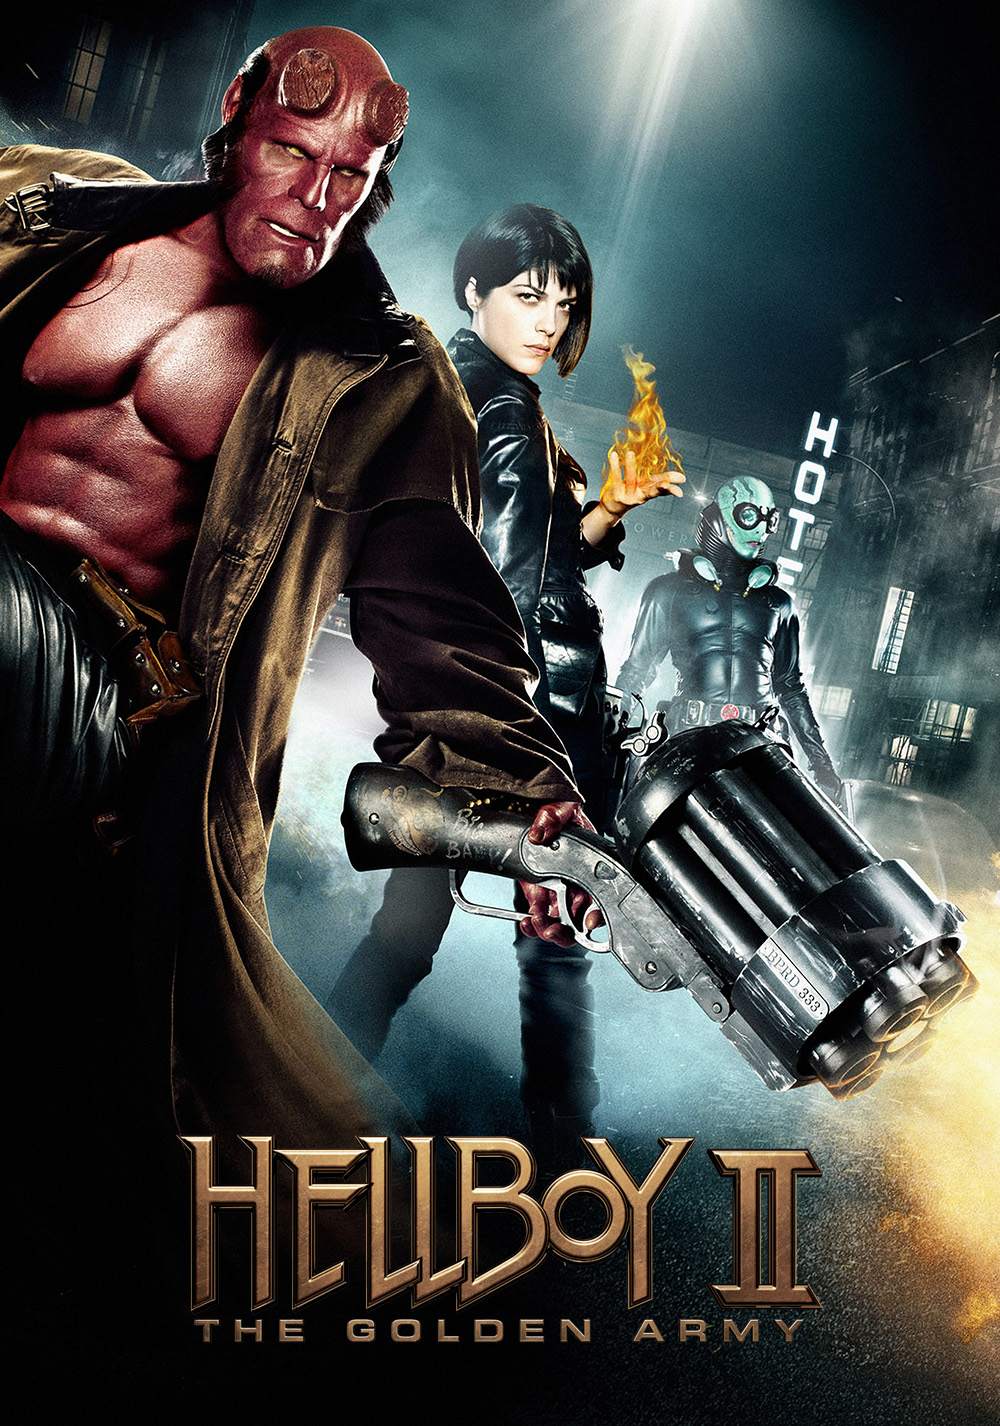 Hellboy II: The Golden Army Art